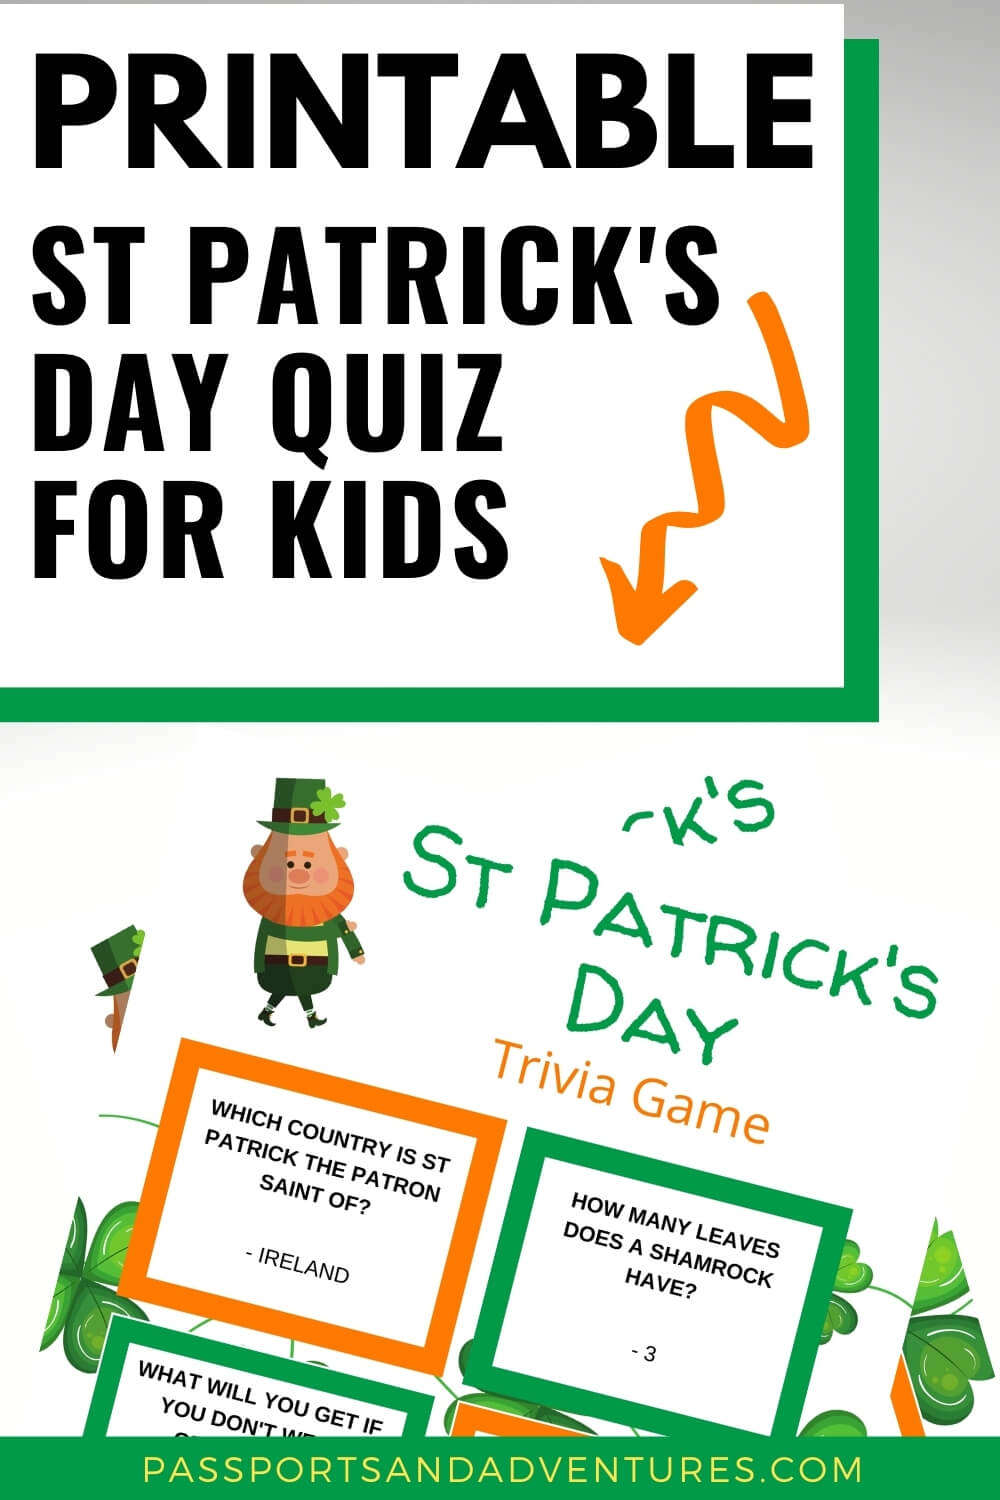 St Patrick's Day Trivia Game